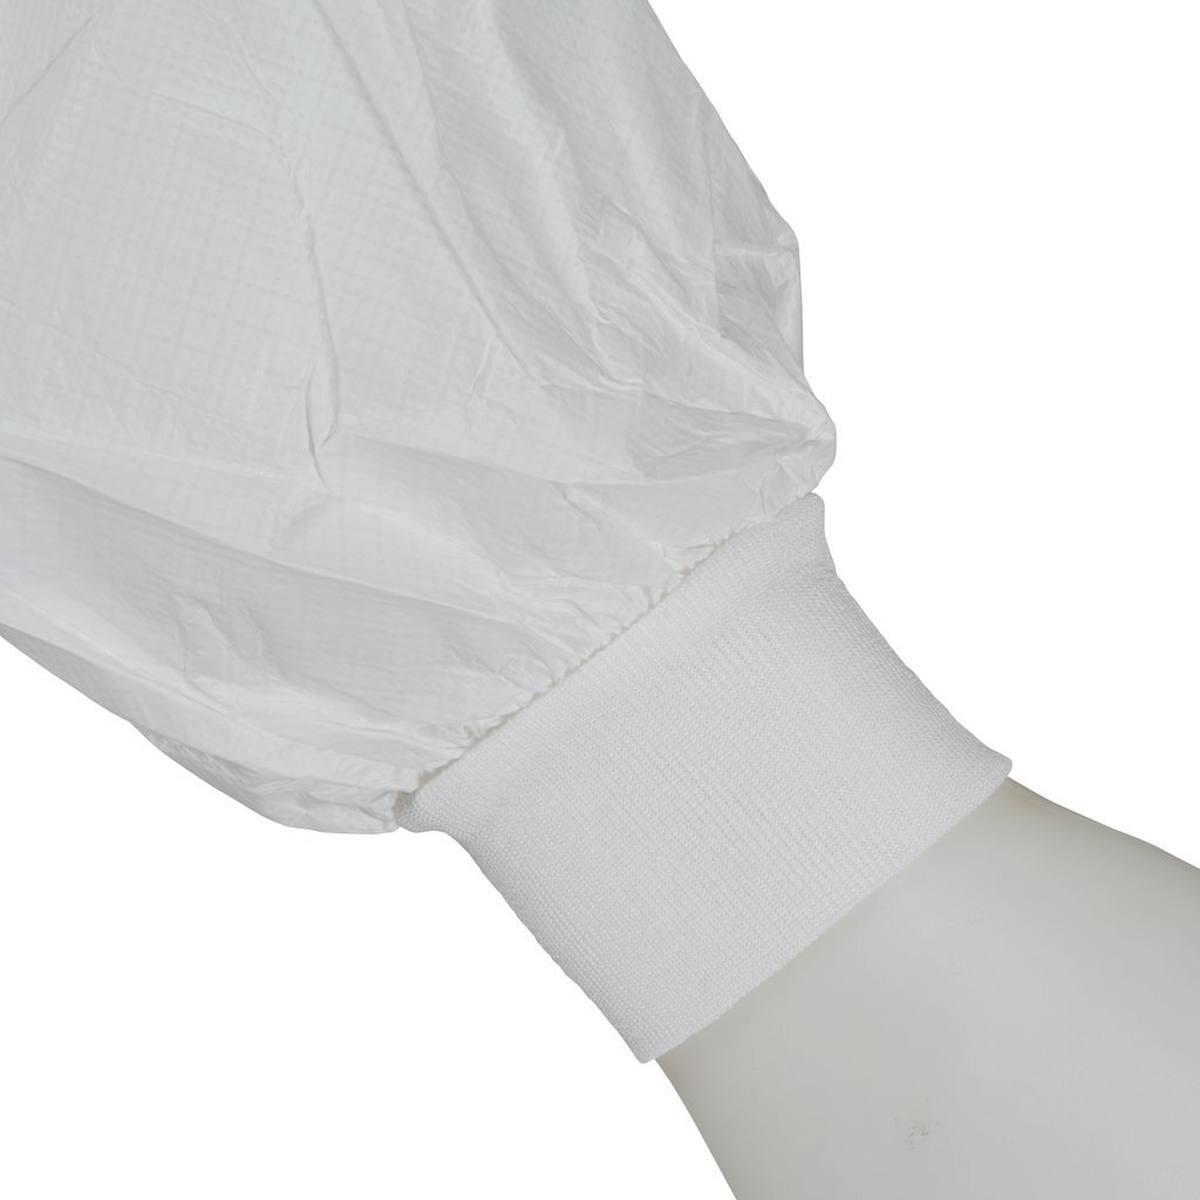 3M 4440 Abrigo, blanco, talla XL, especialmente transpirable, muy ligero, con cremallera, puños de punto